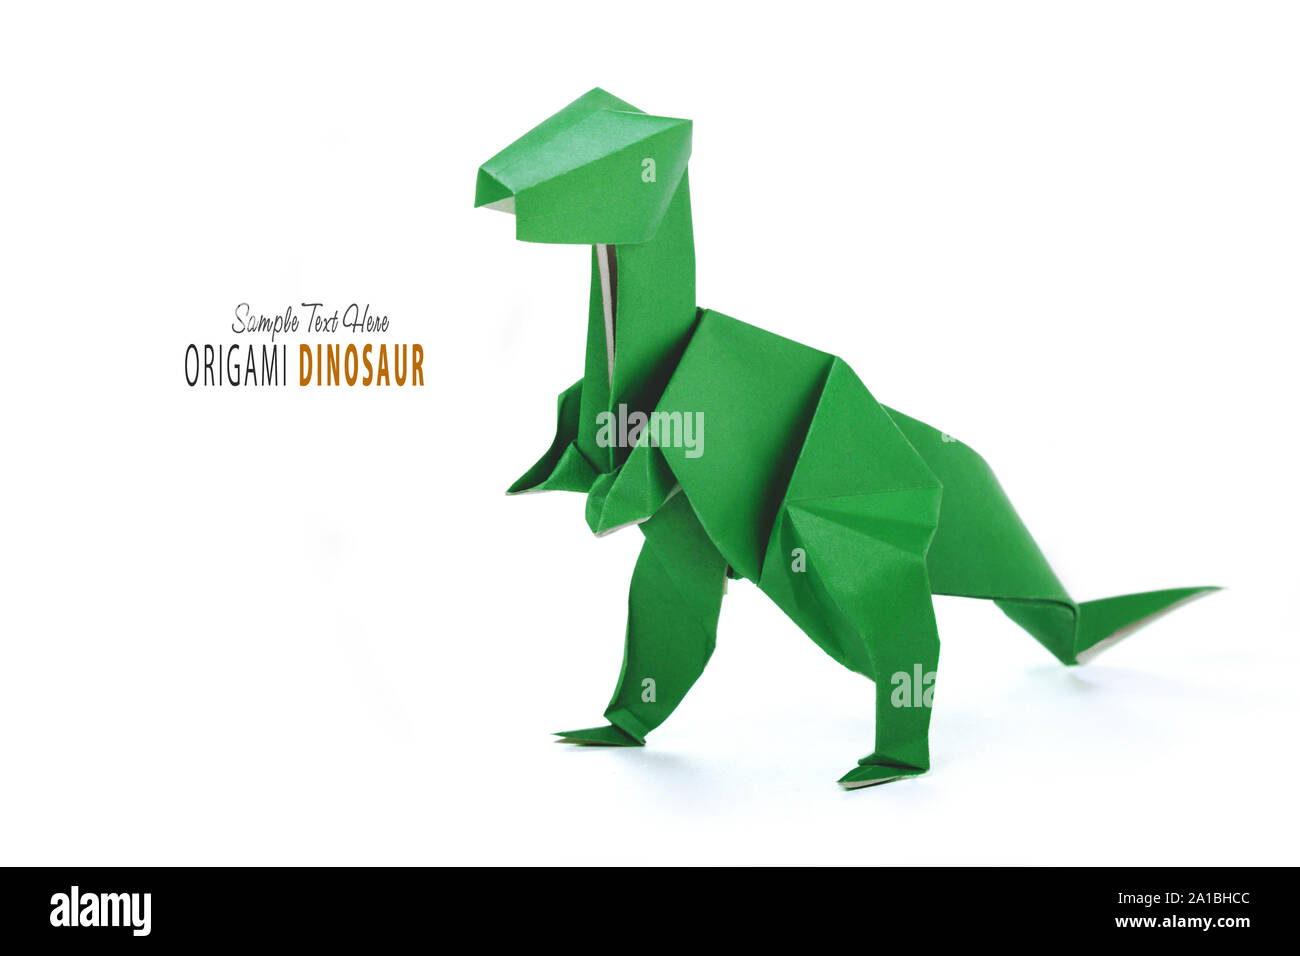 Origami dinosaur on white Stock Photo